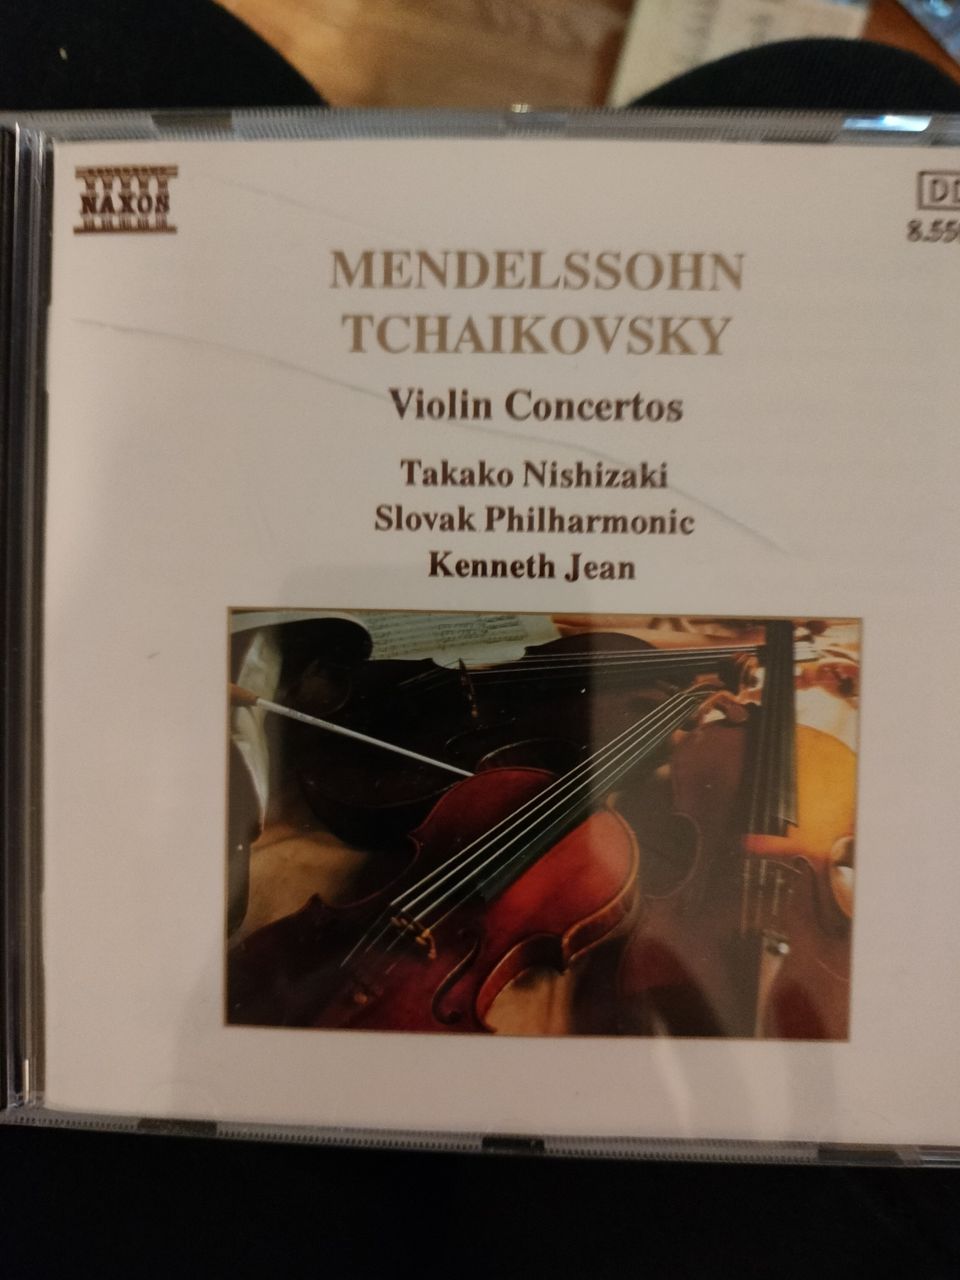 Mendelssohn Tchaikovsky